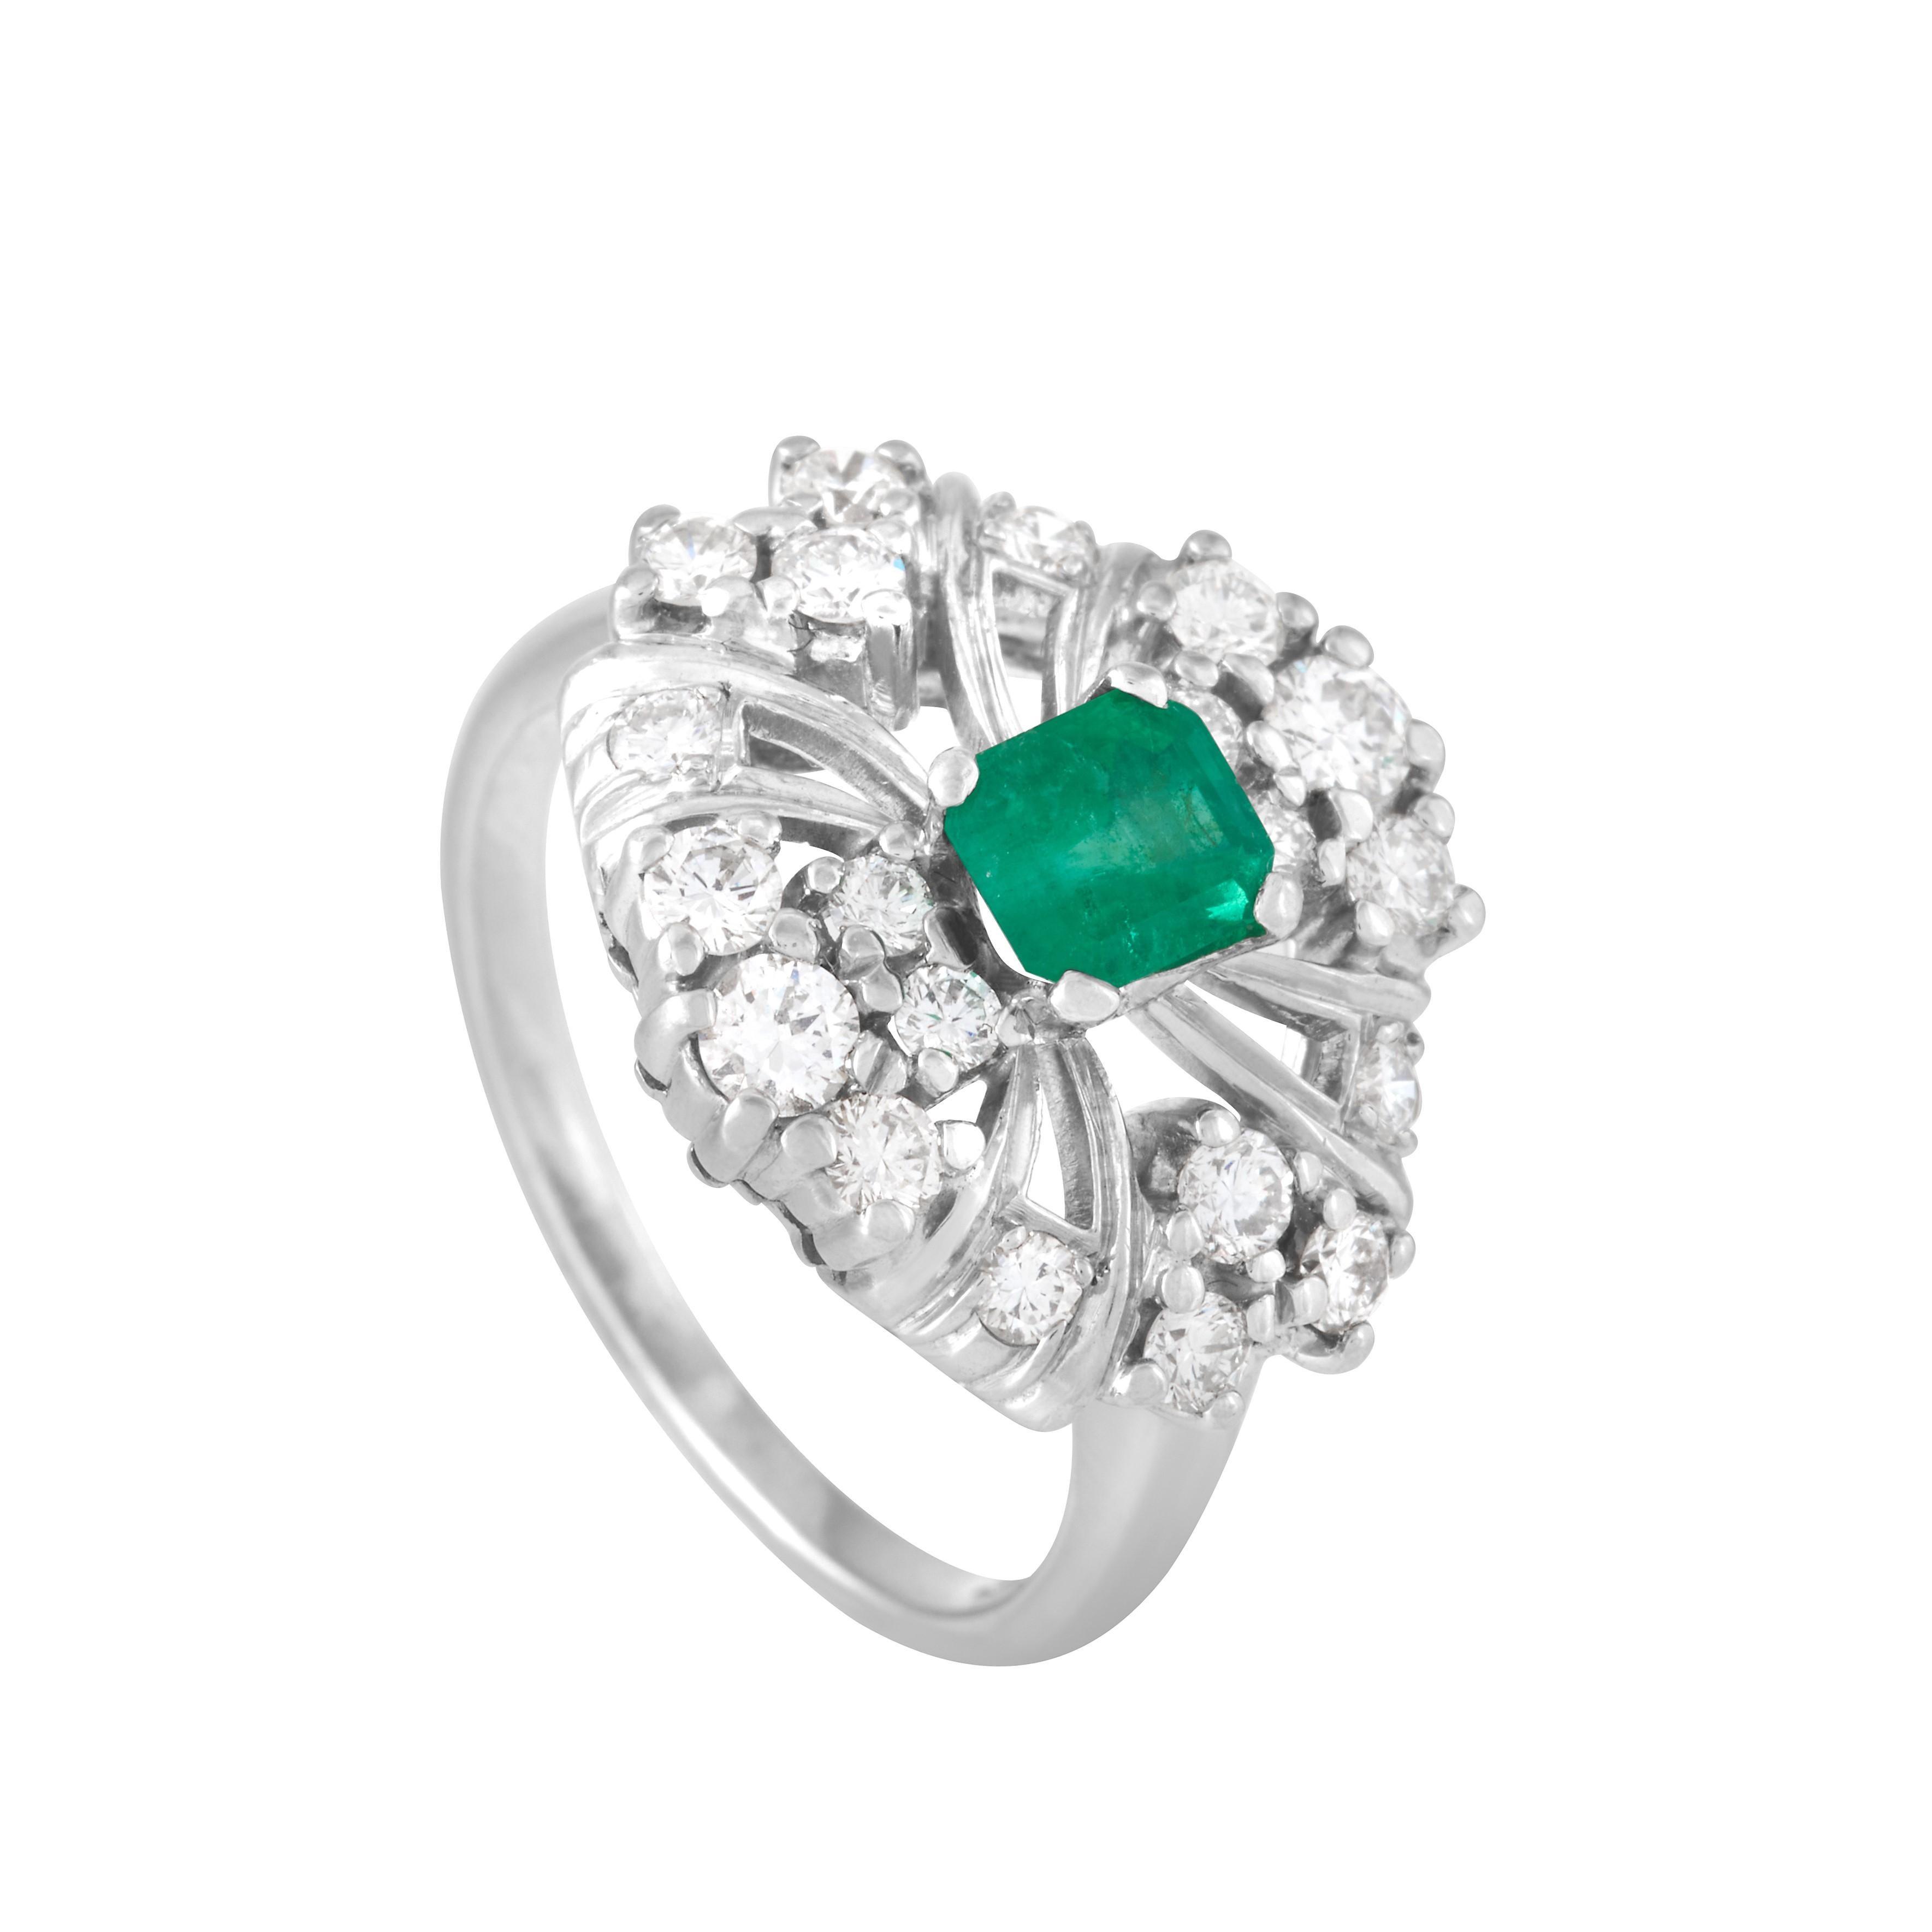 Emerald Cut Bailey Banks & Biddle 0.50 Carat Emerald and Diamond Ring in Platinum